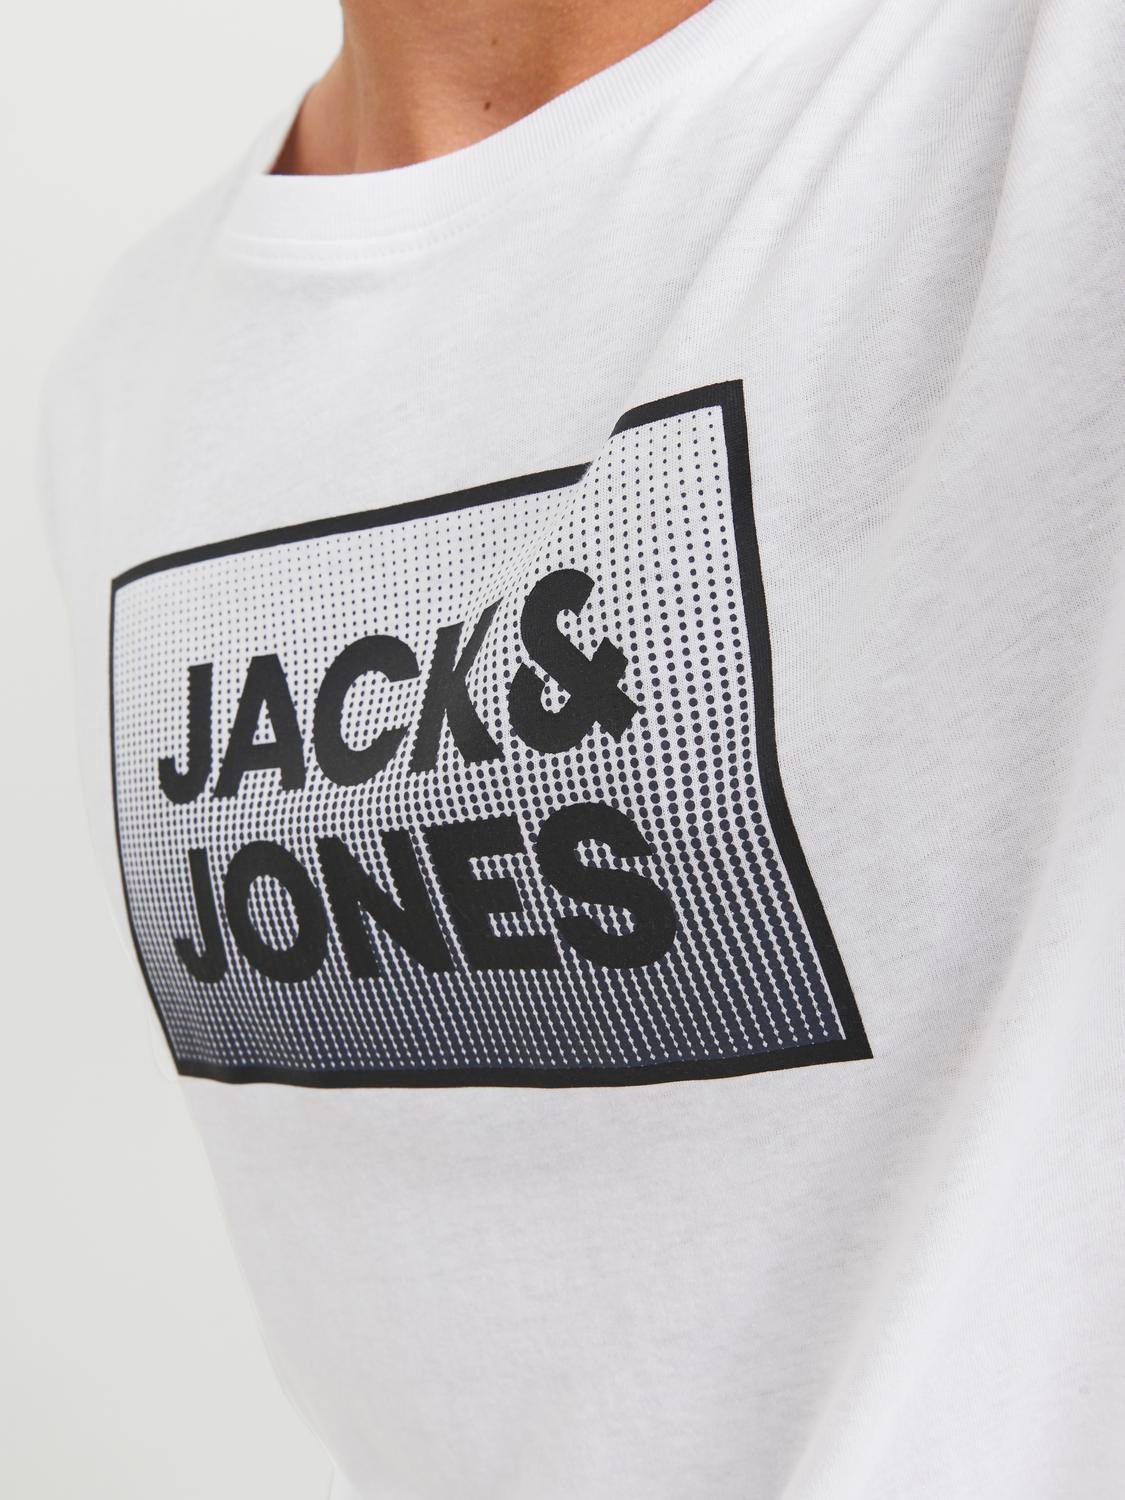 Jack & Jones T-shirt Logo Decote Redondo -White - 12249331